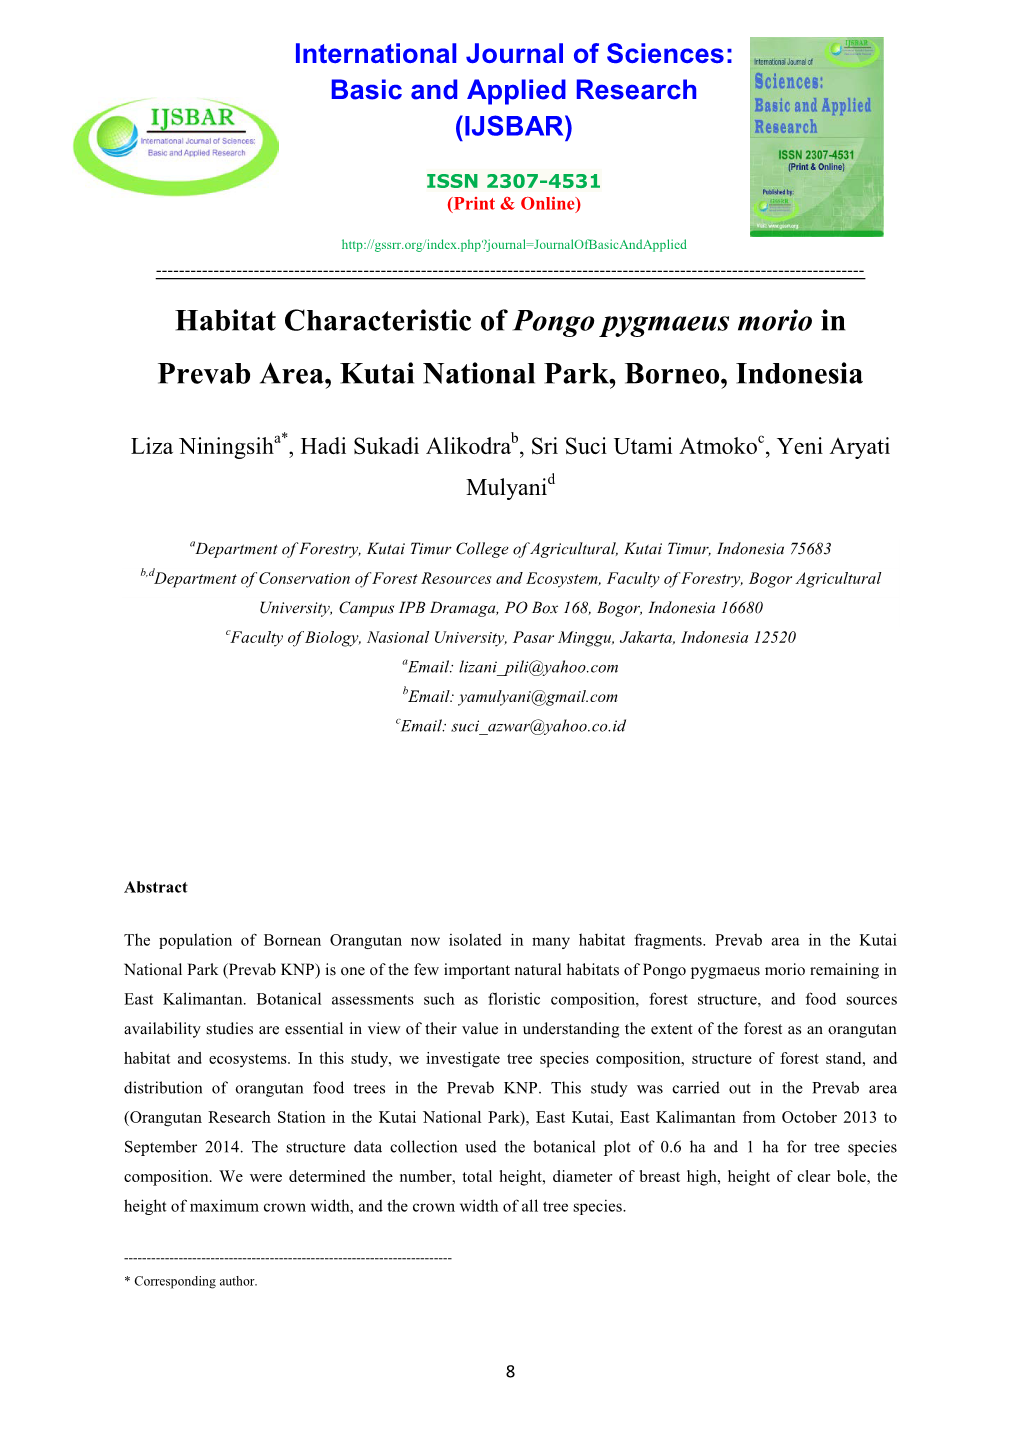 Habitat Characteristic of Pongo Pygmaeus Morio in Prevab Area, Kutai National Park, Borneo, Indonesia